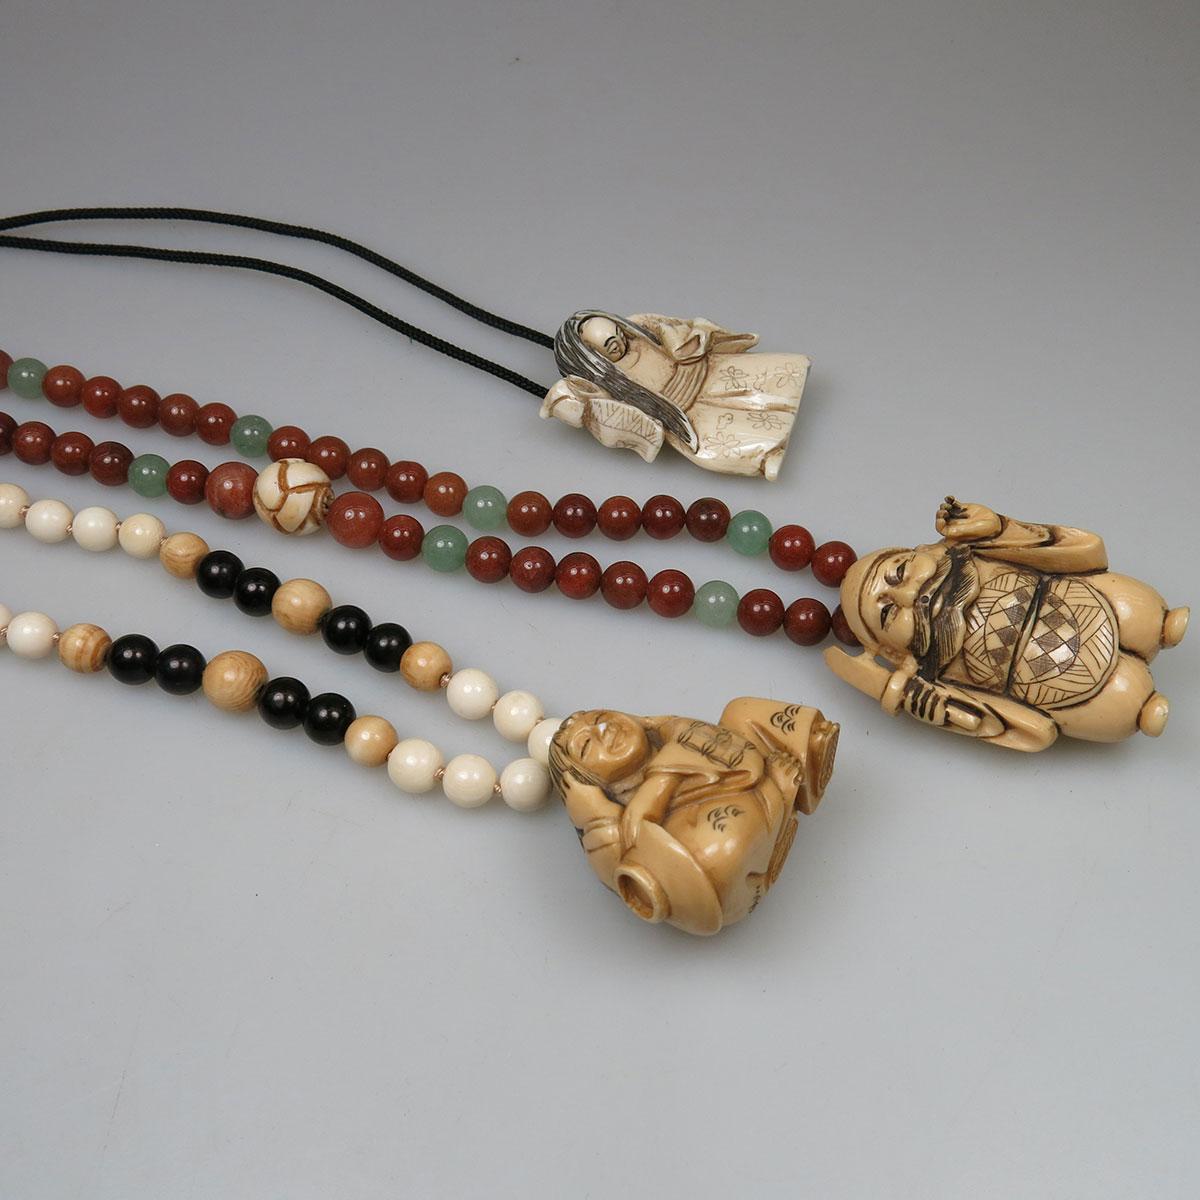 3 Carved Ivory Netsuki Necklaces